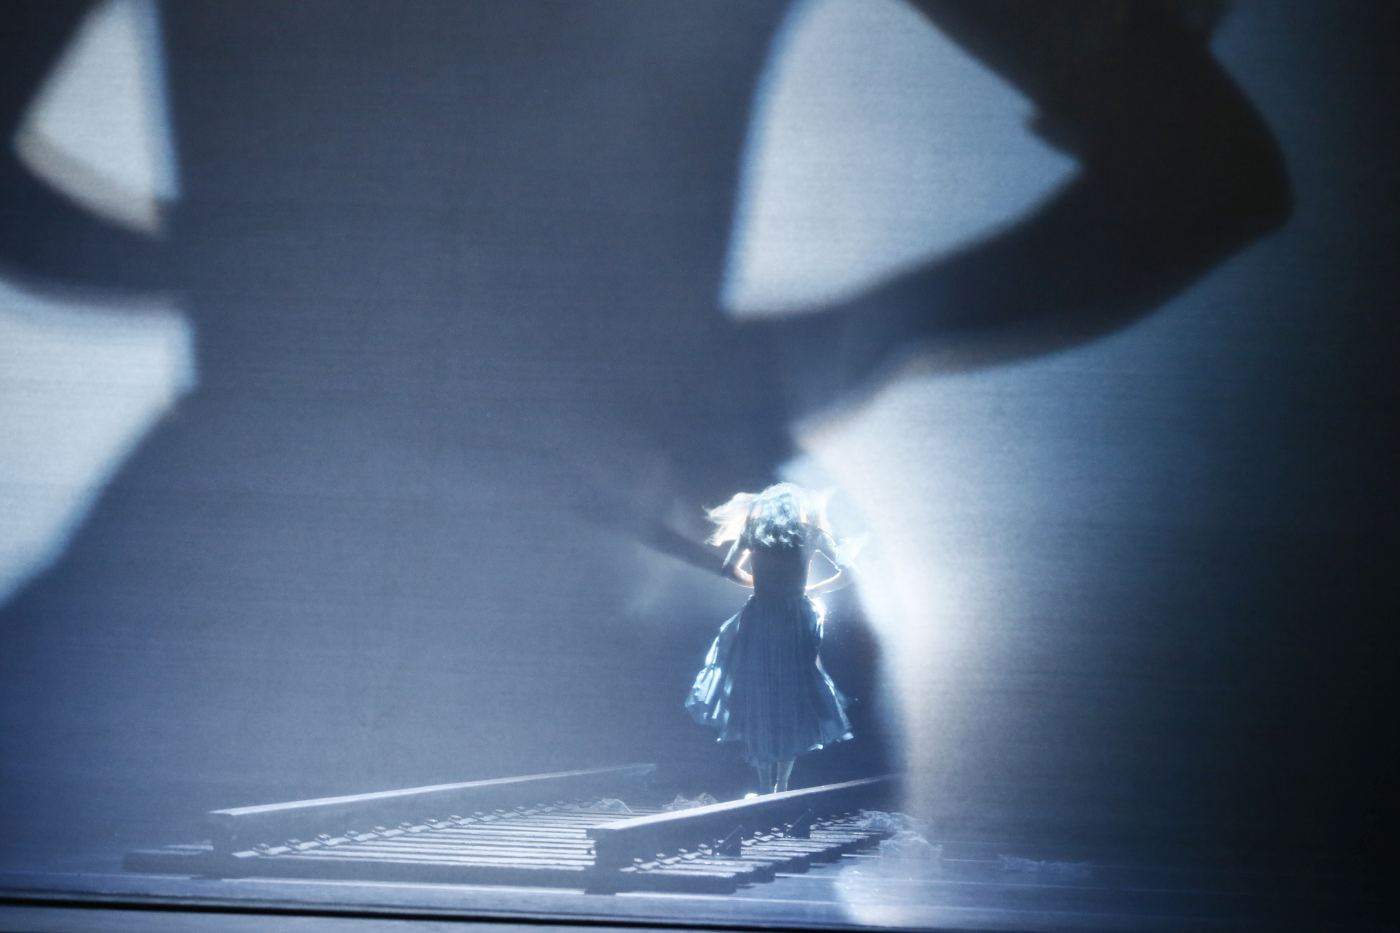 18. R.Hendricks (Anna Karenina), “Anna Karenina” by Y.Possokhov, The Australian Ballet 2022 © J.Busby